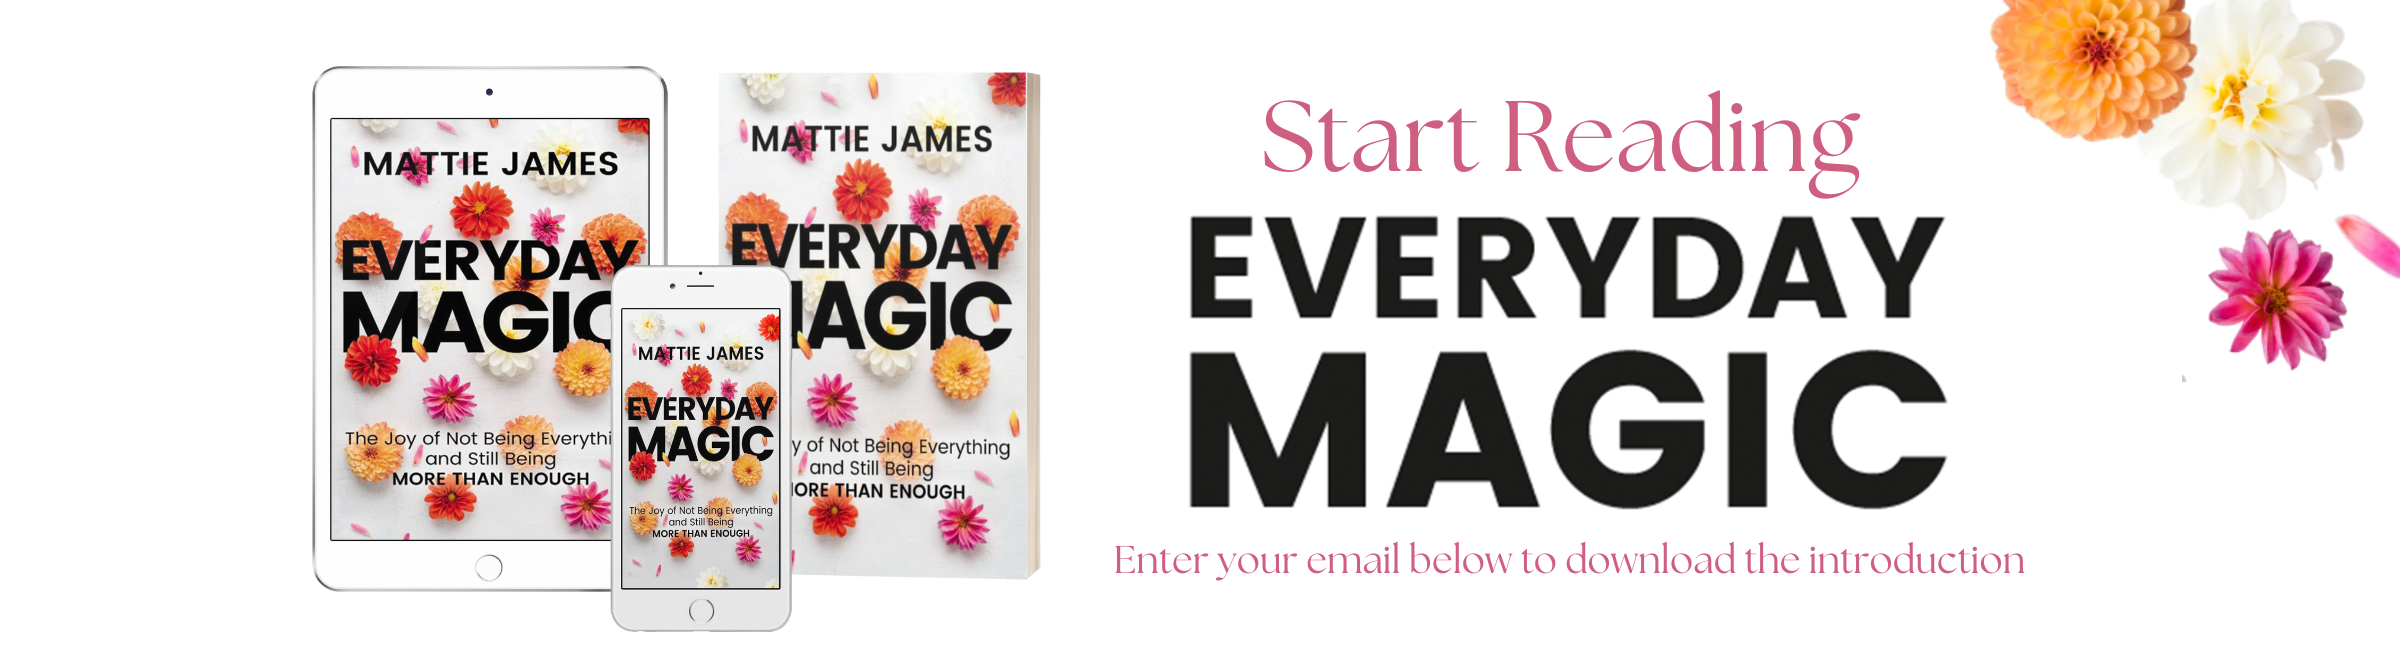 Start reading everyday magic by mattie james